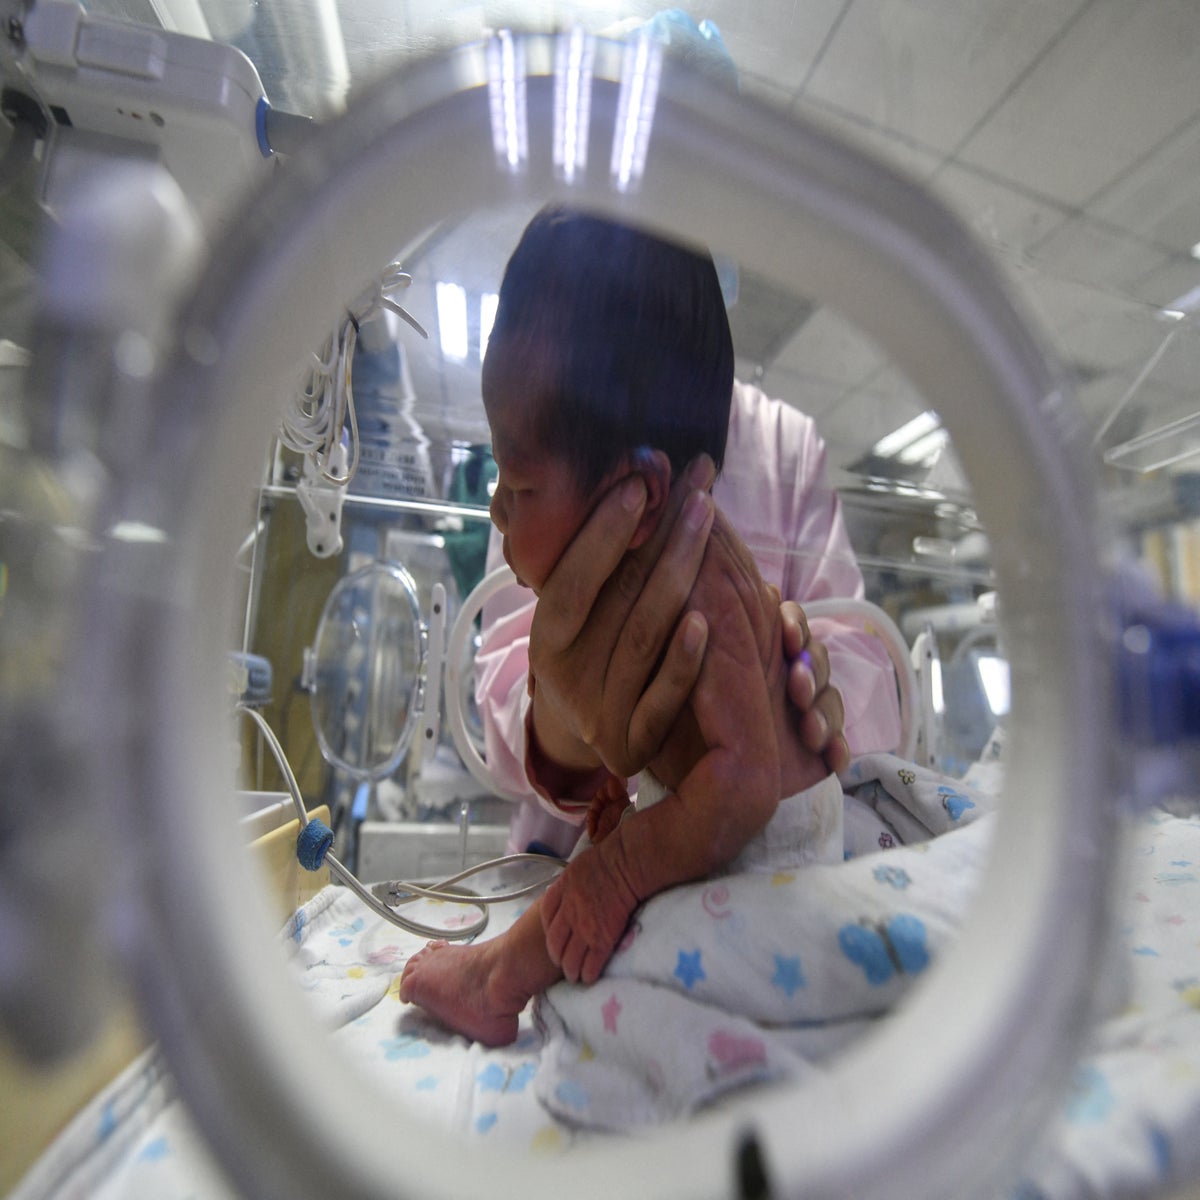 World's smallest baby in incubator